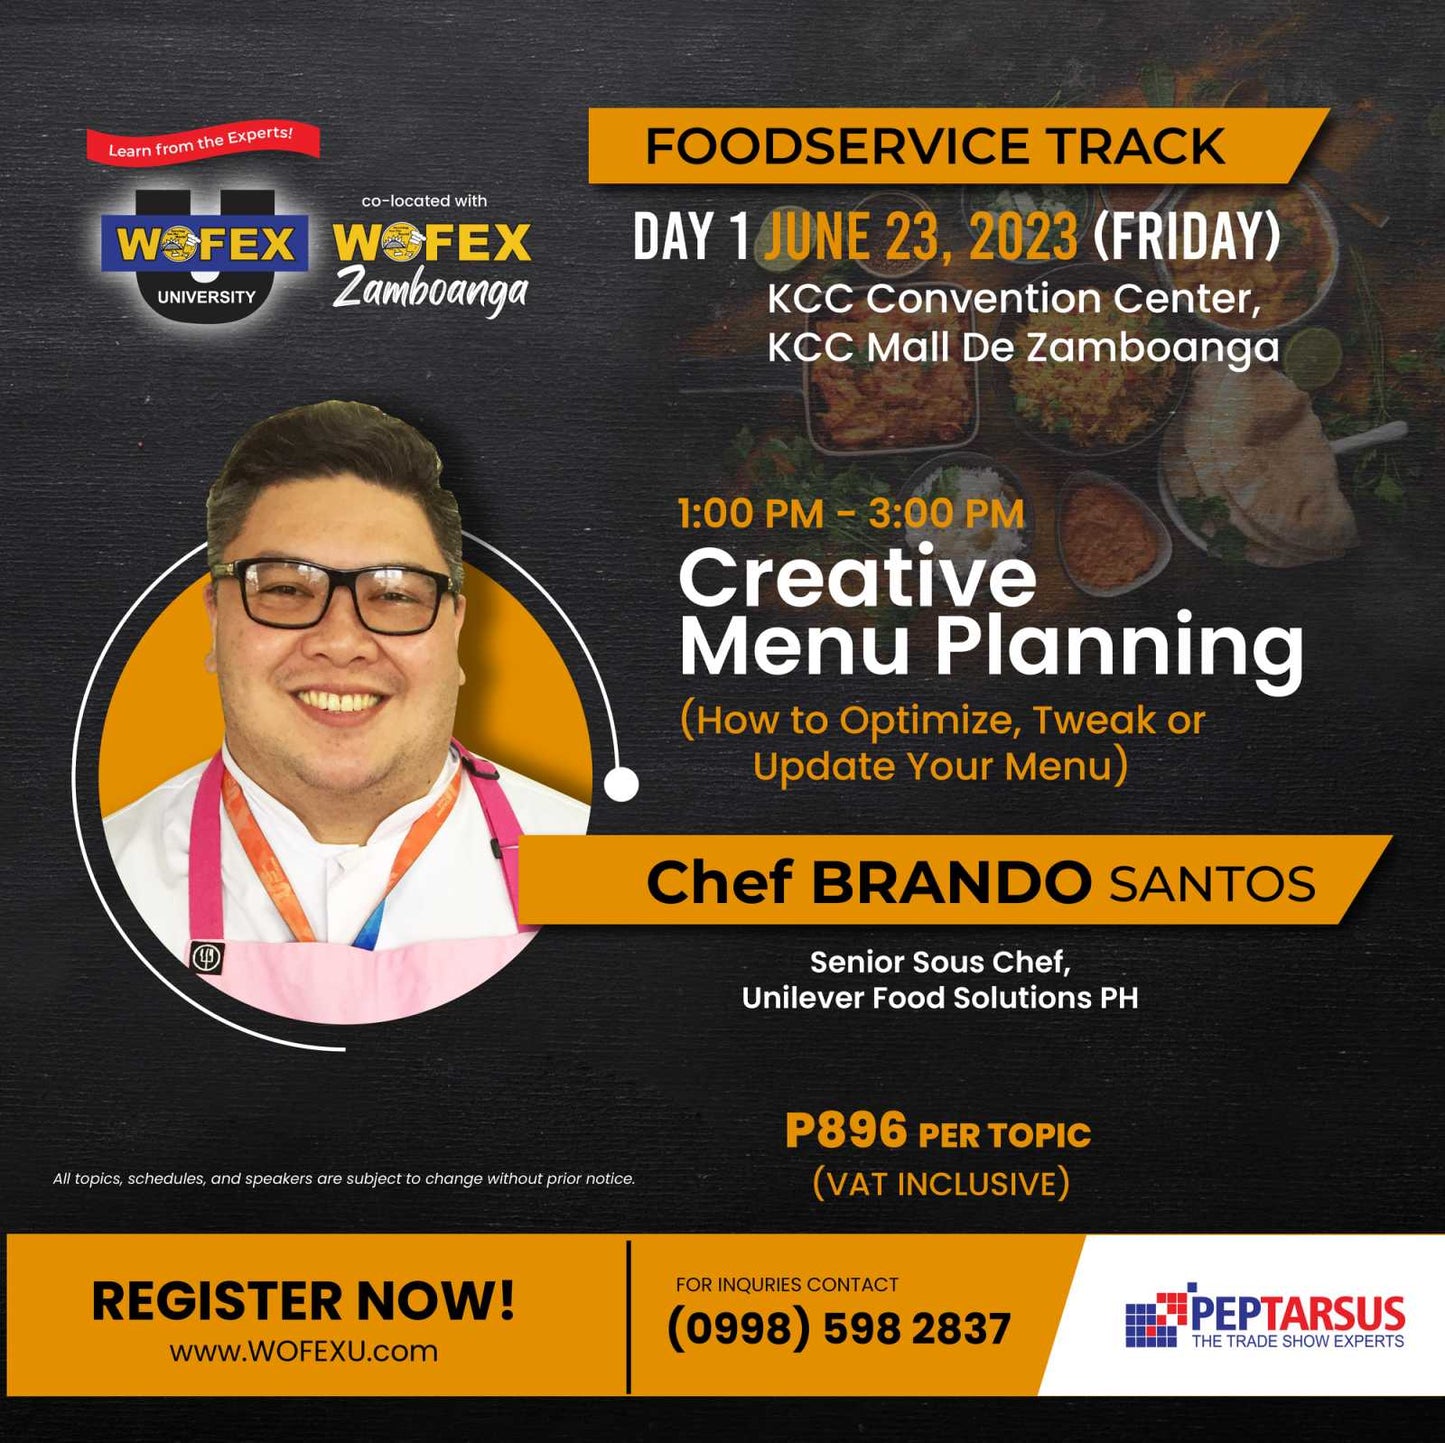 Foodservice and Food Business Tracks in Zamboanga!